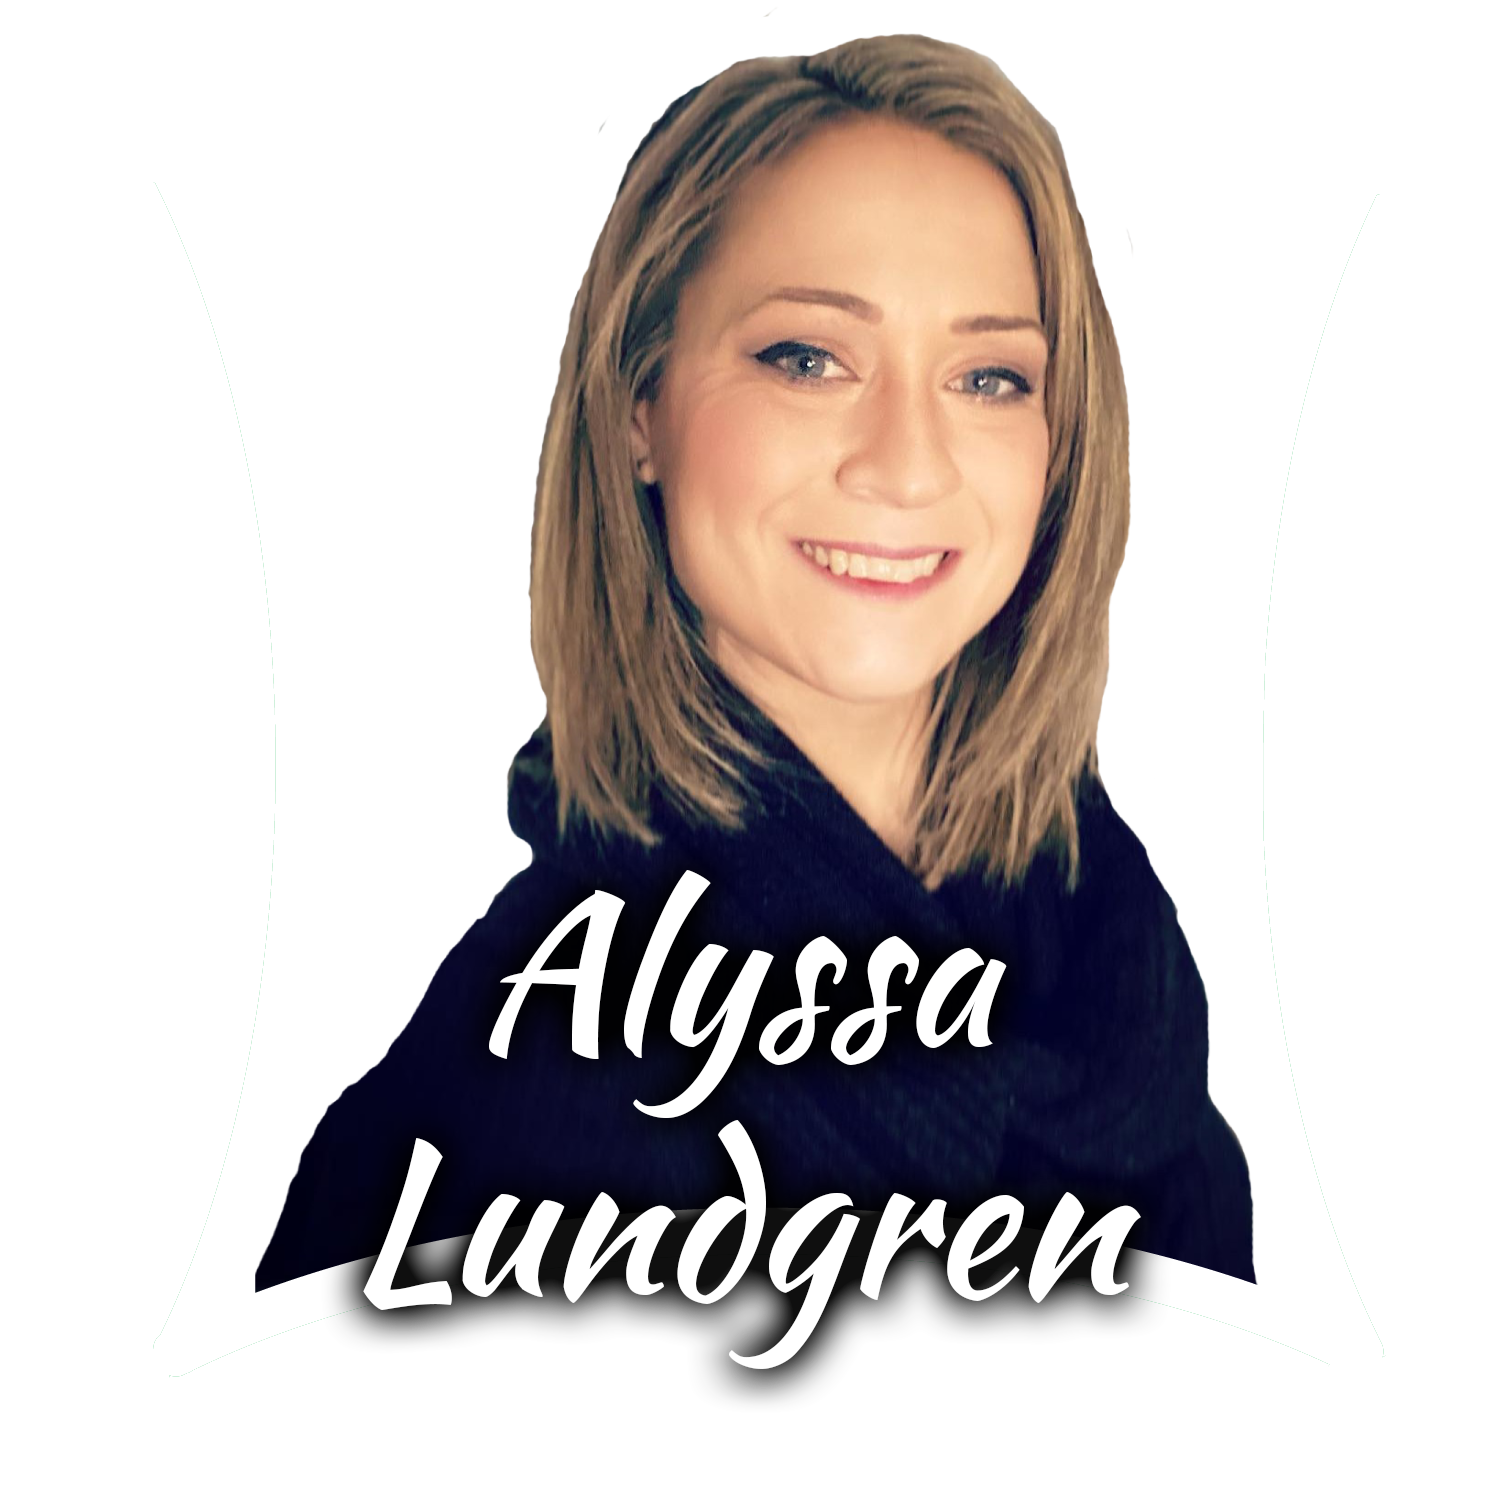 alyssa_lundgren_name